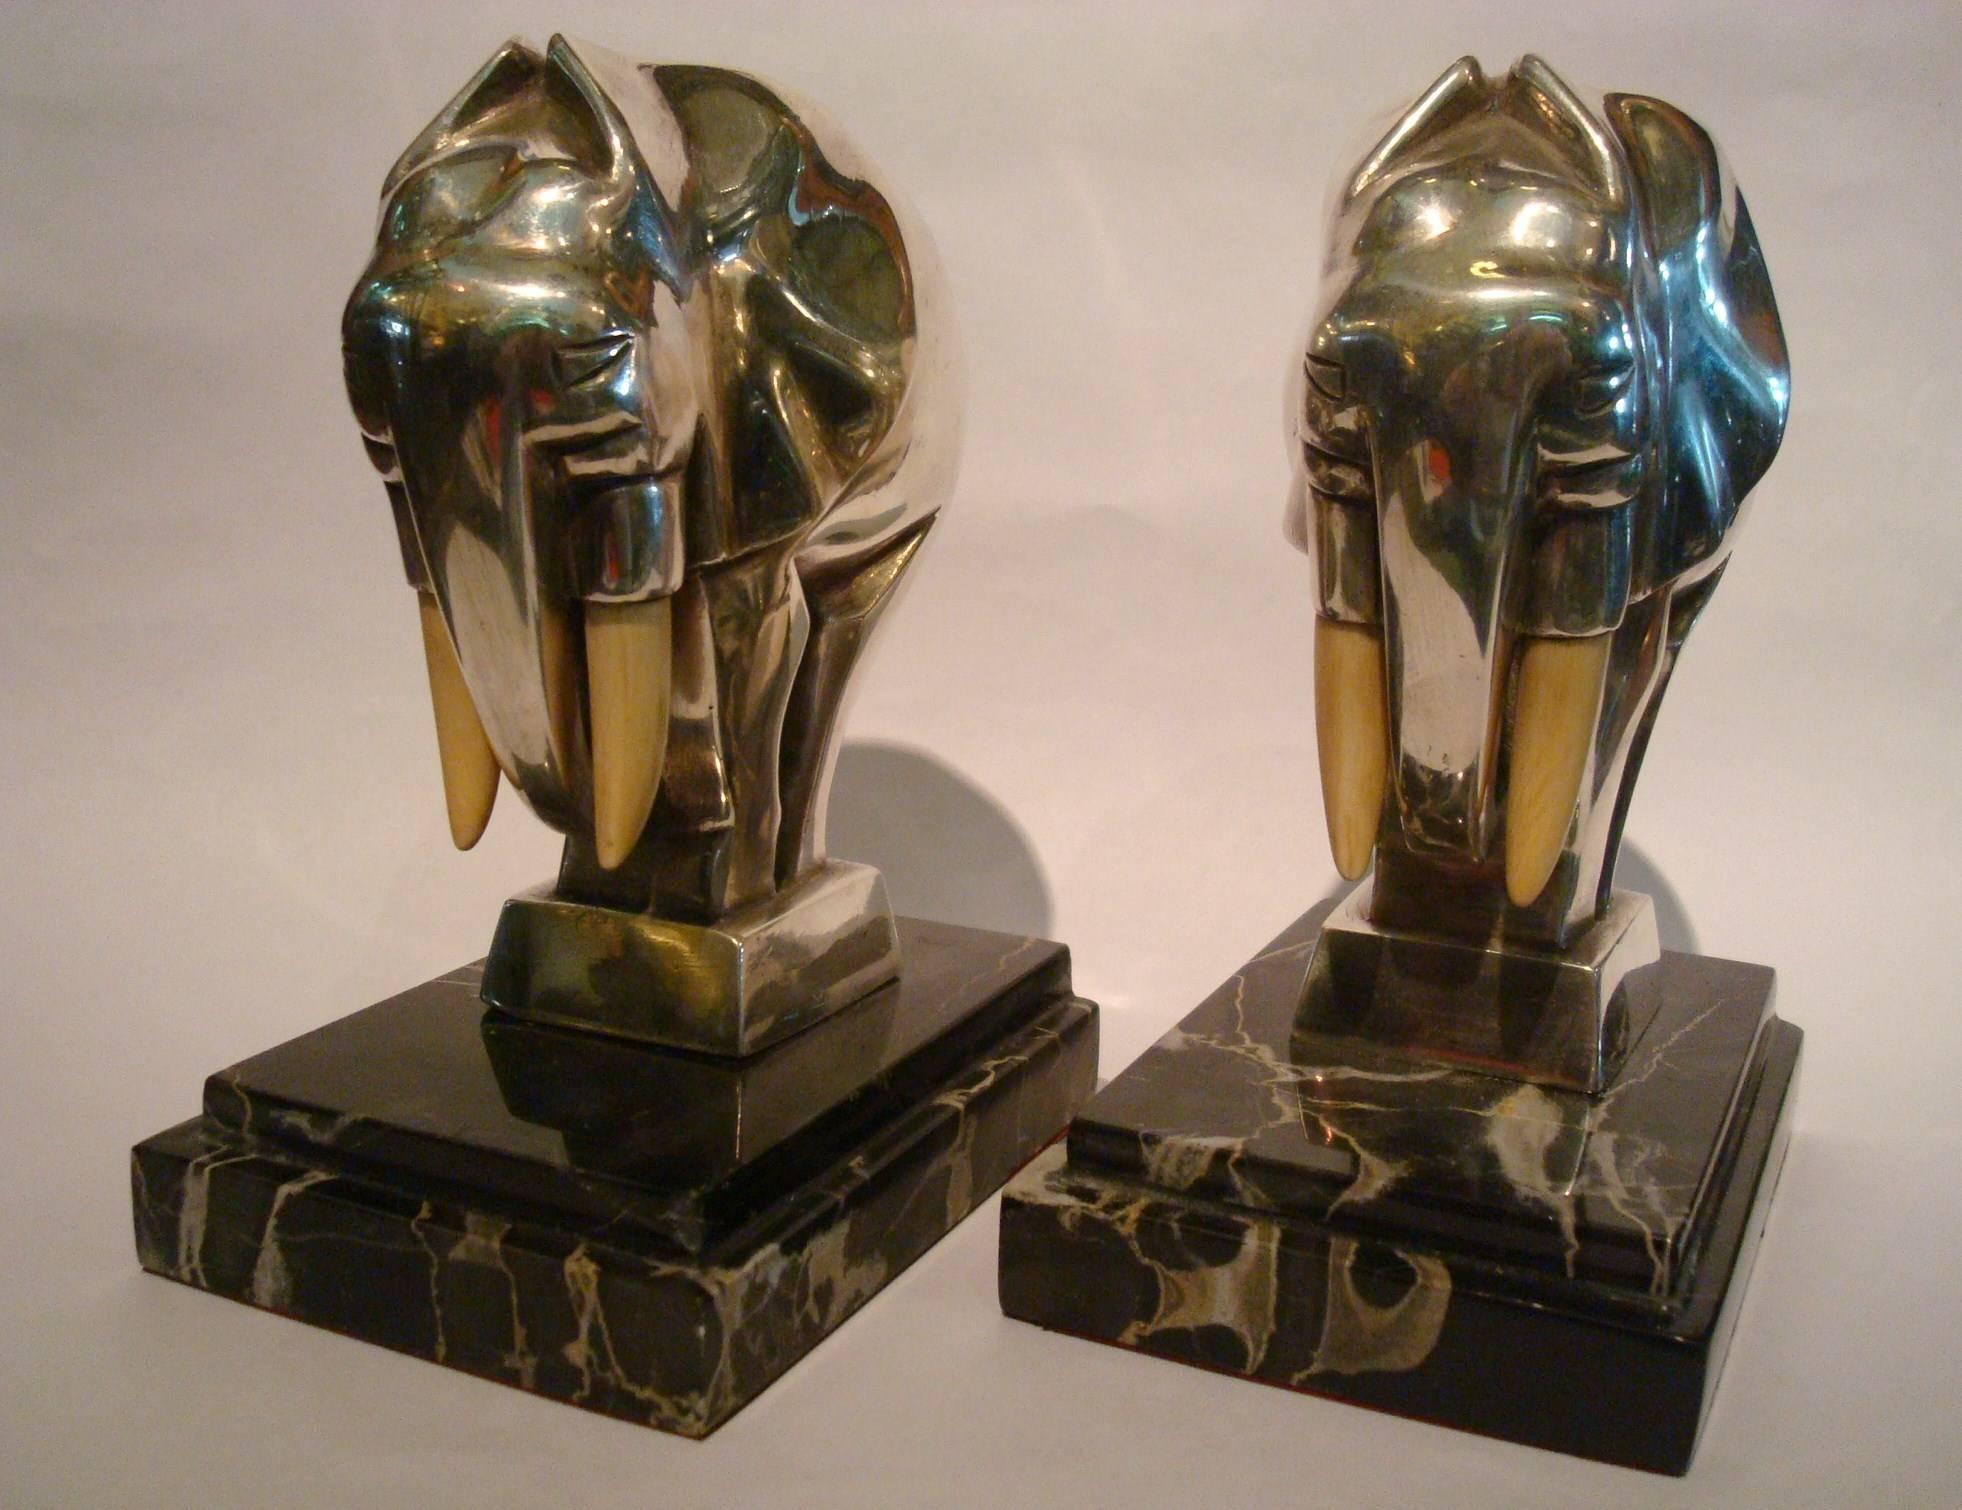 Silvered Fantastic Art Deco Elephant Bookends Signed G. H. Laurent, France, 1920s